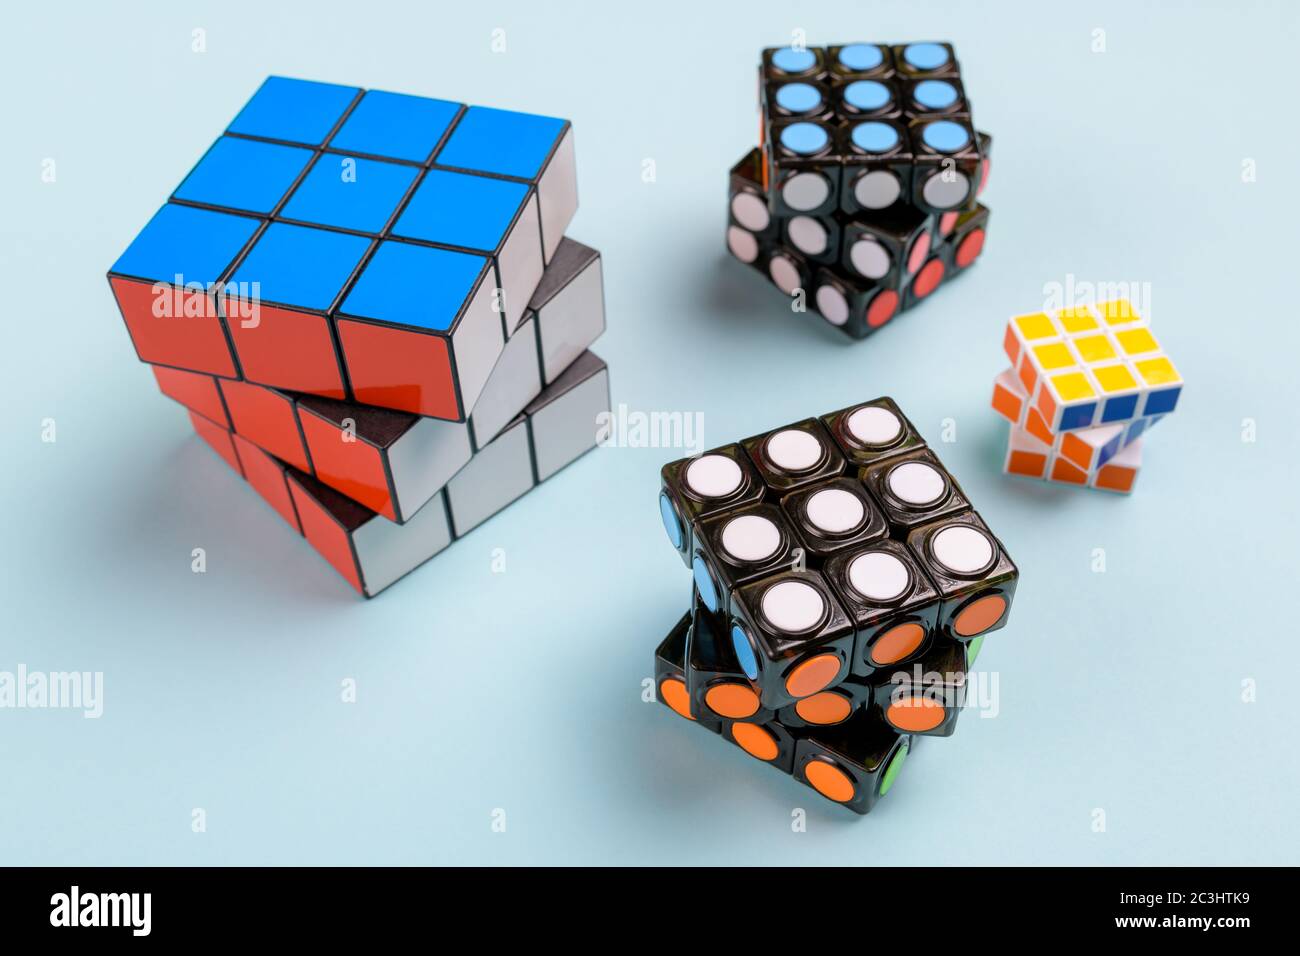 NOVI SAD, SERBIA - JUNE 10, 2018: Rubik's Cube, originally called Magic cube, invented by a Hungarian sculptor and professor of architecture Erno Rubi Stock Photo